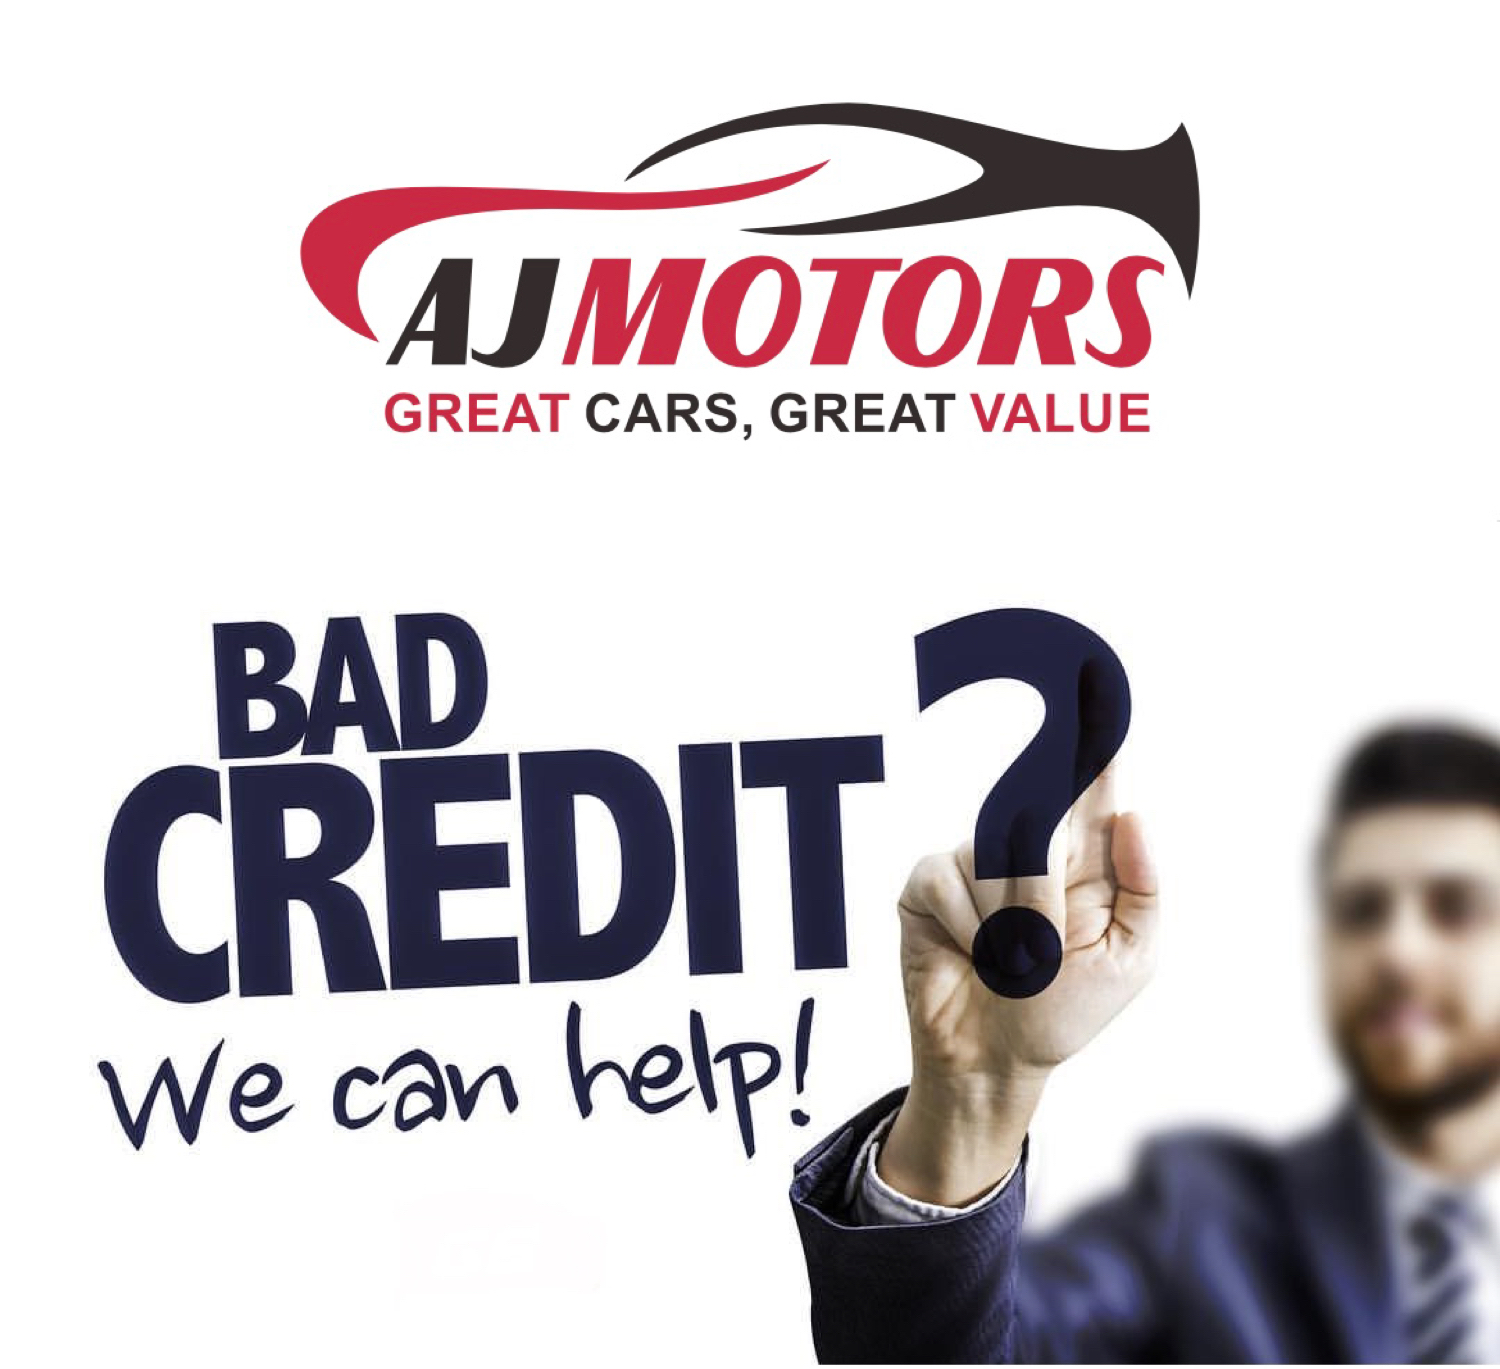 Why Choose AJ Motors?